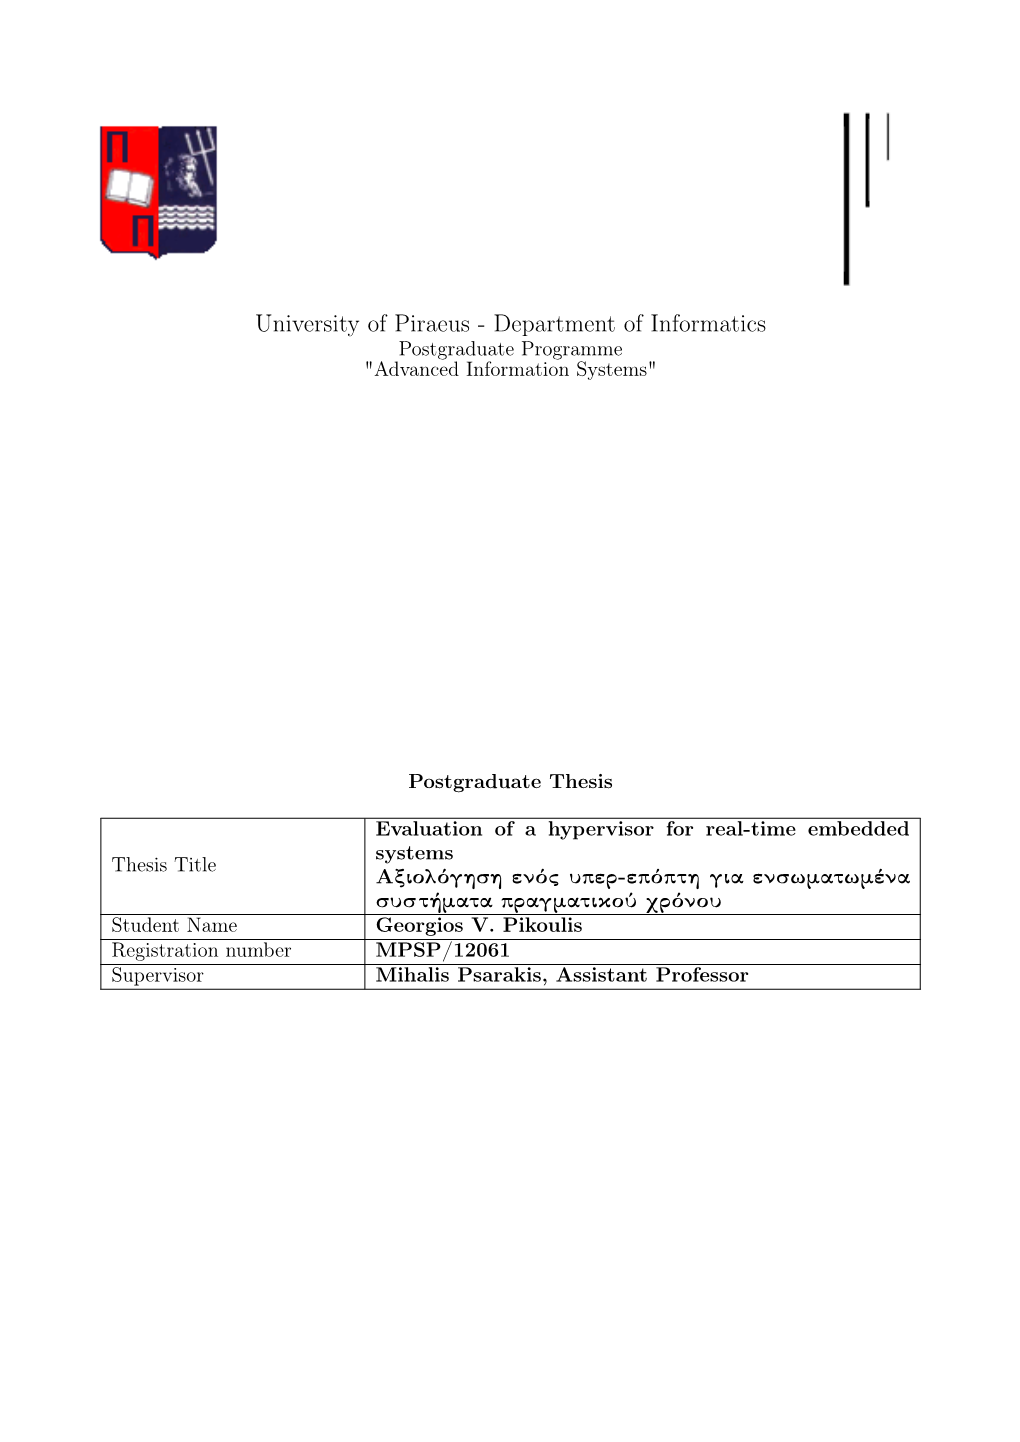 University of Piraeus - Department of Informatics Postgraduate Programme "Advanced Information Systems"